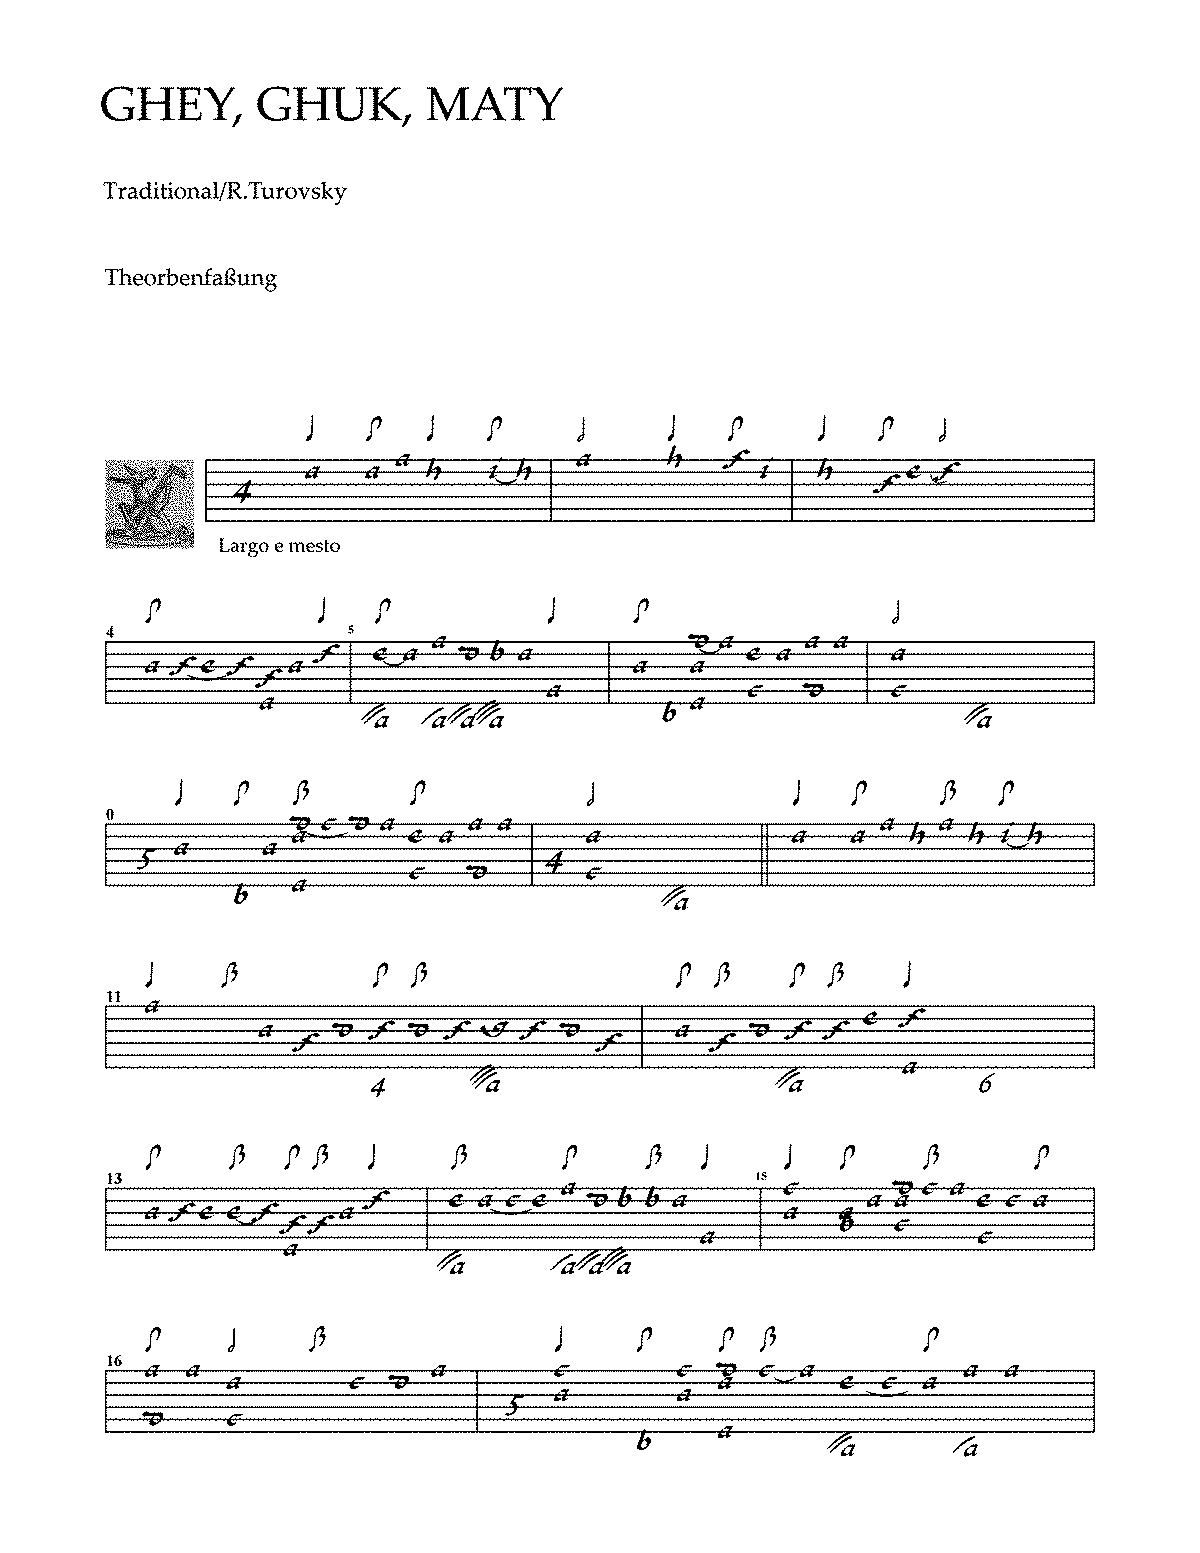 Cantio Ruthenica 'Alta Clamat Mater' (Turovsky-Savchuk, Roman) - IMSLP